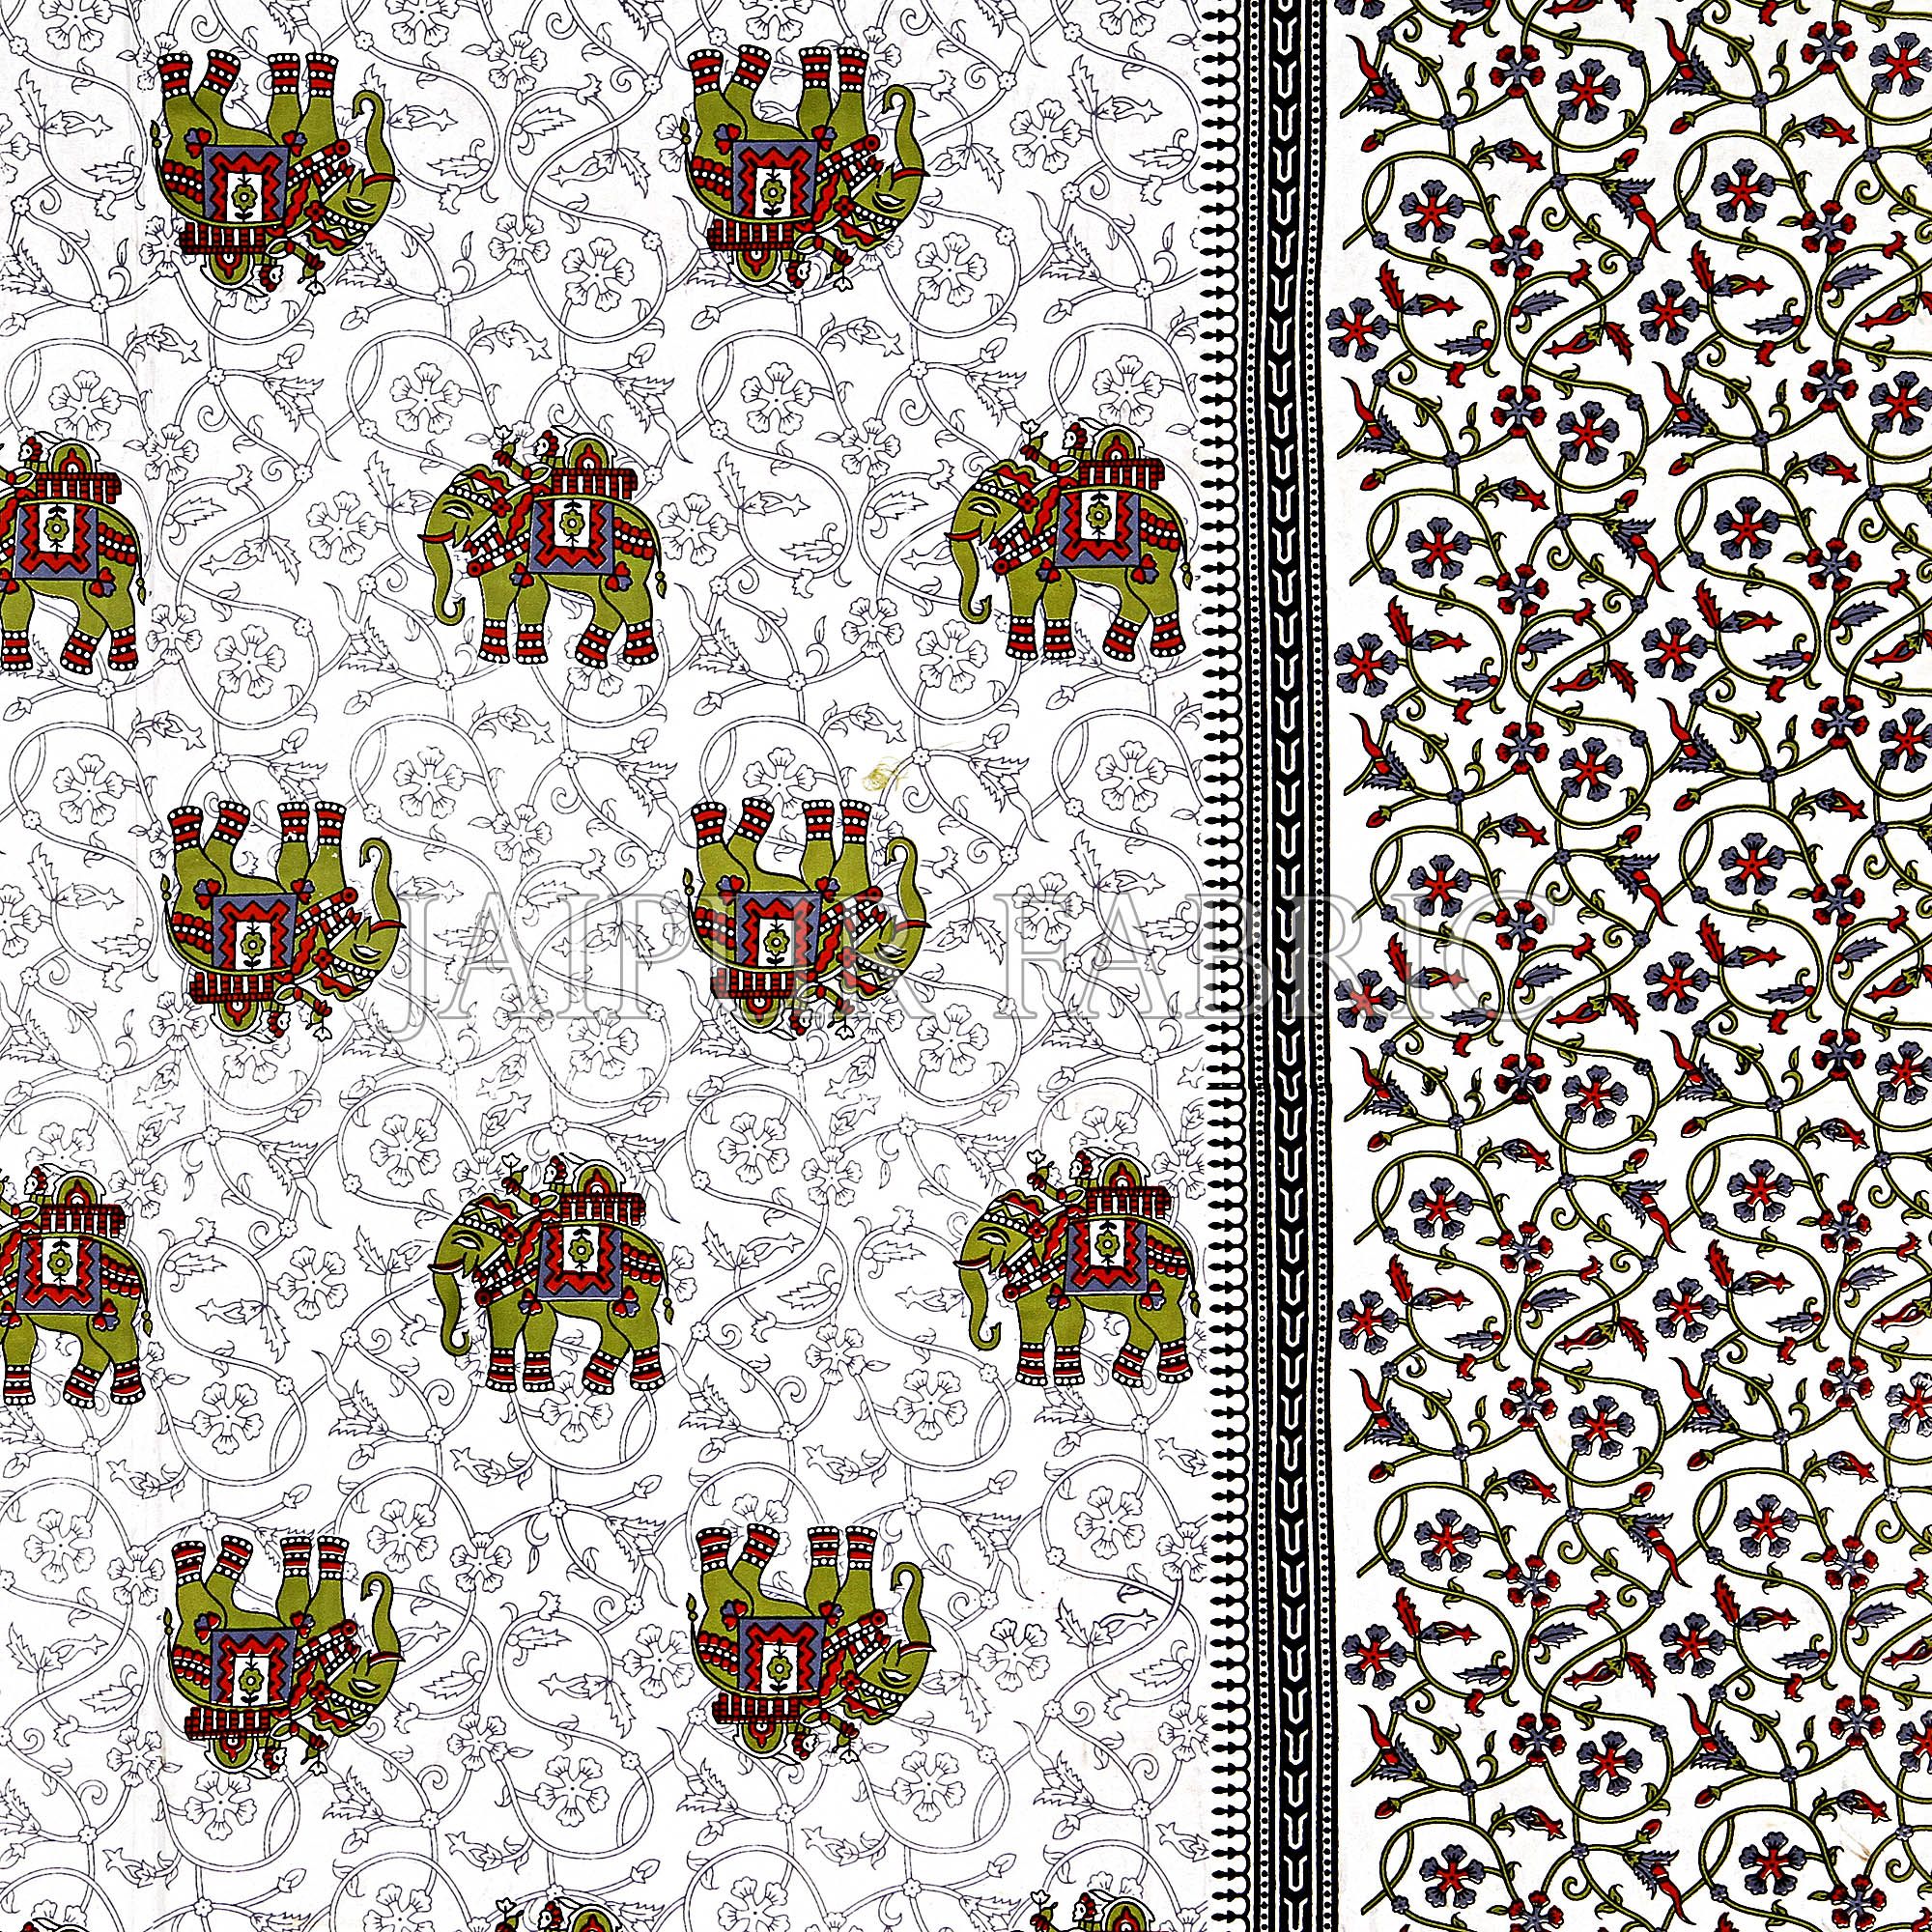 Green Border Jaipuri Elephant Print Cotton Double Bed Sheet